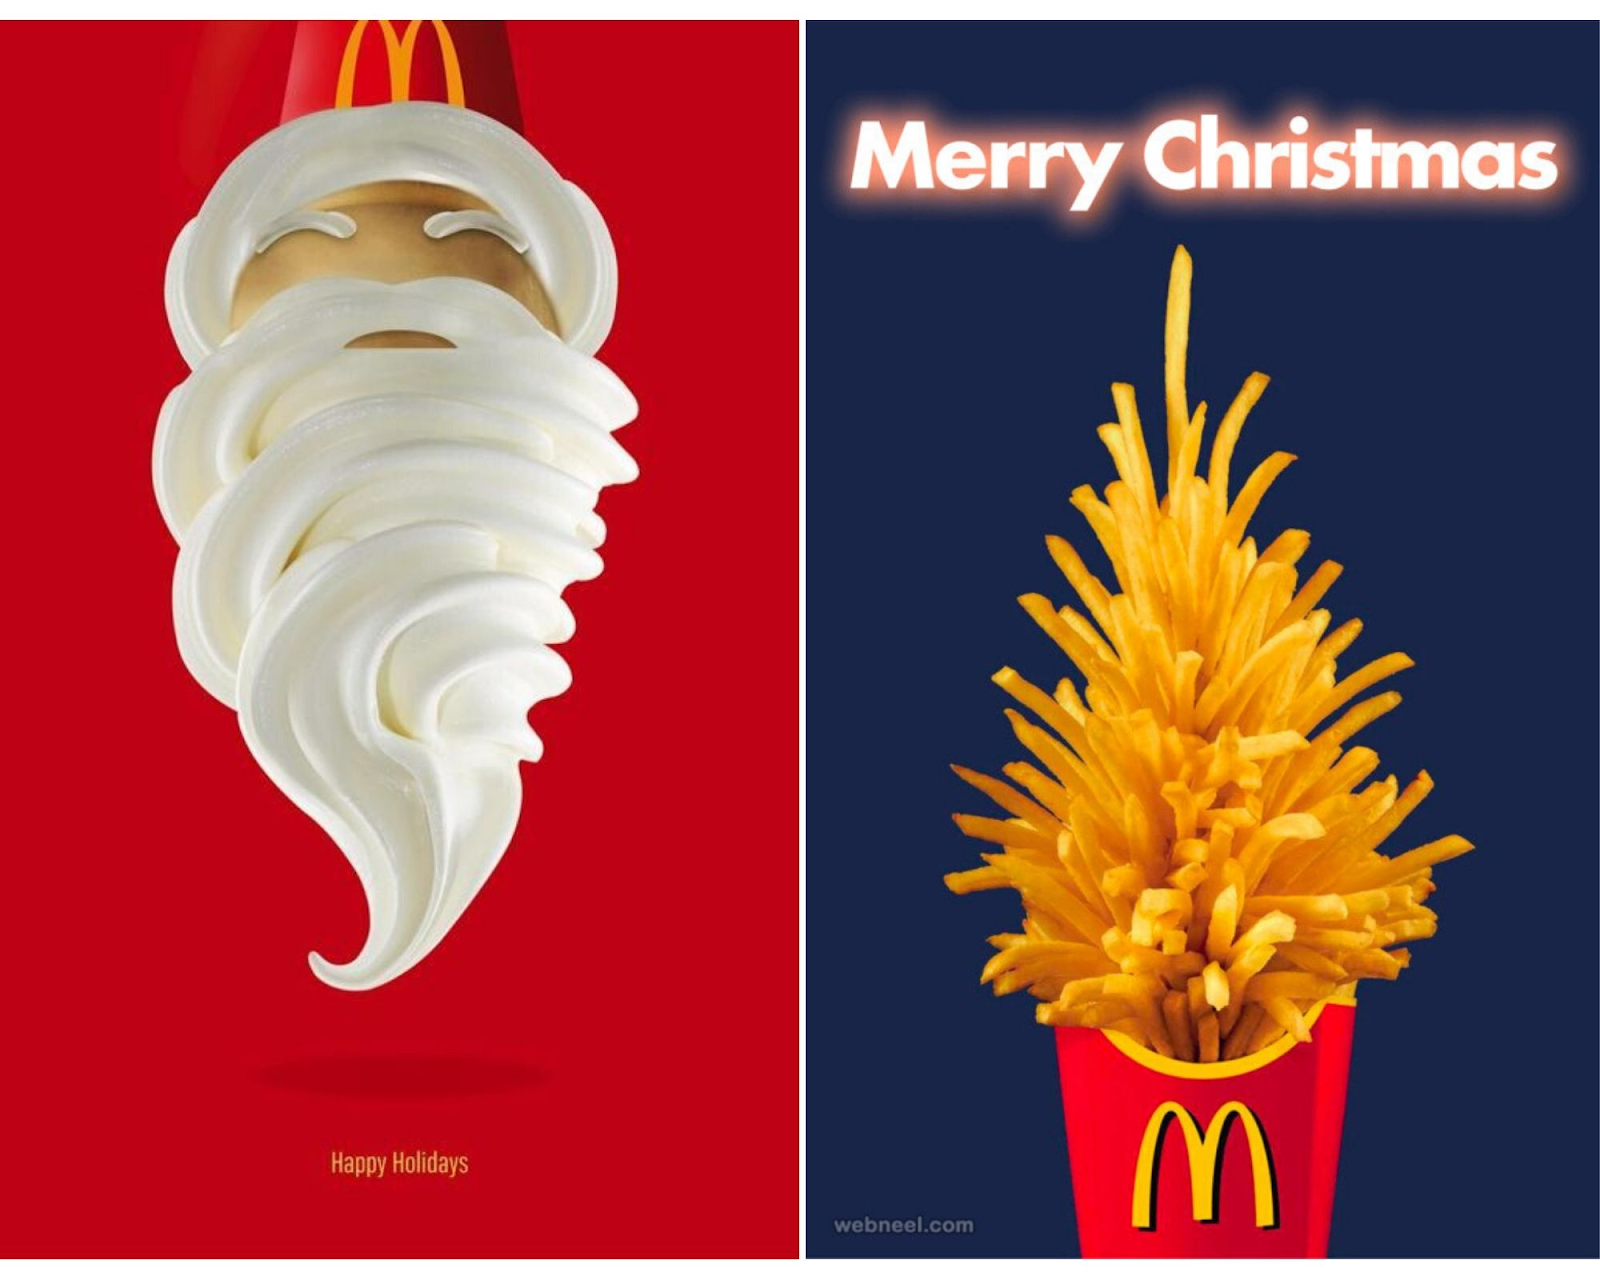 mcdonalds holiday ad